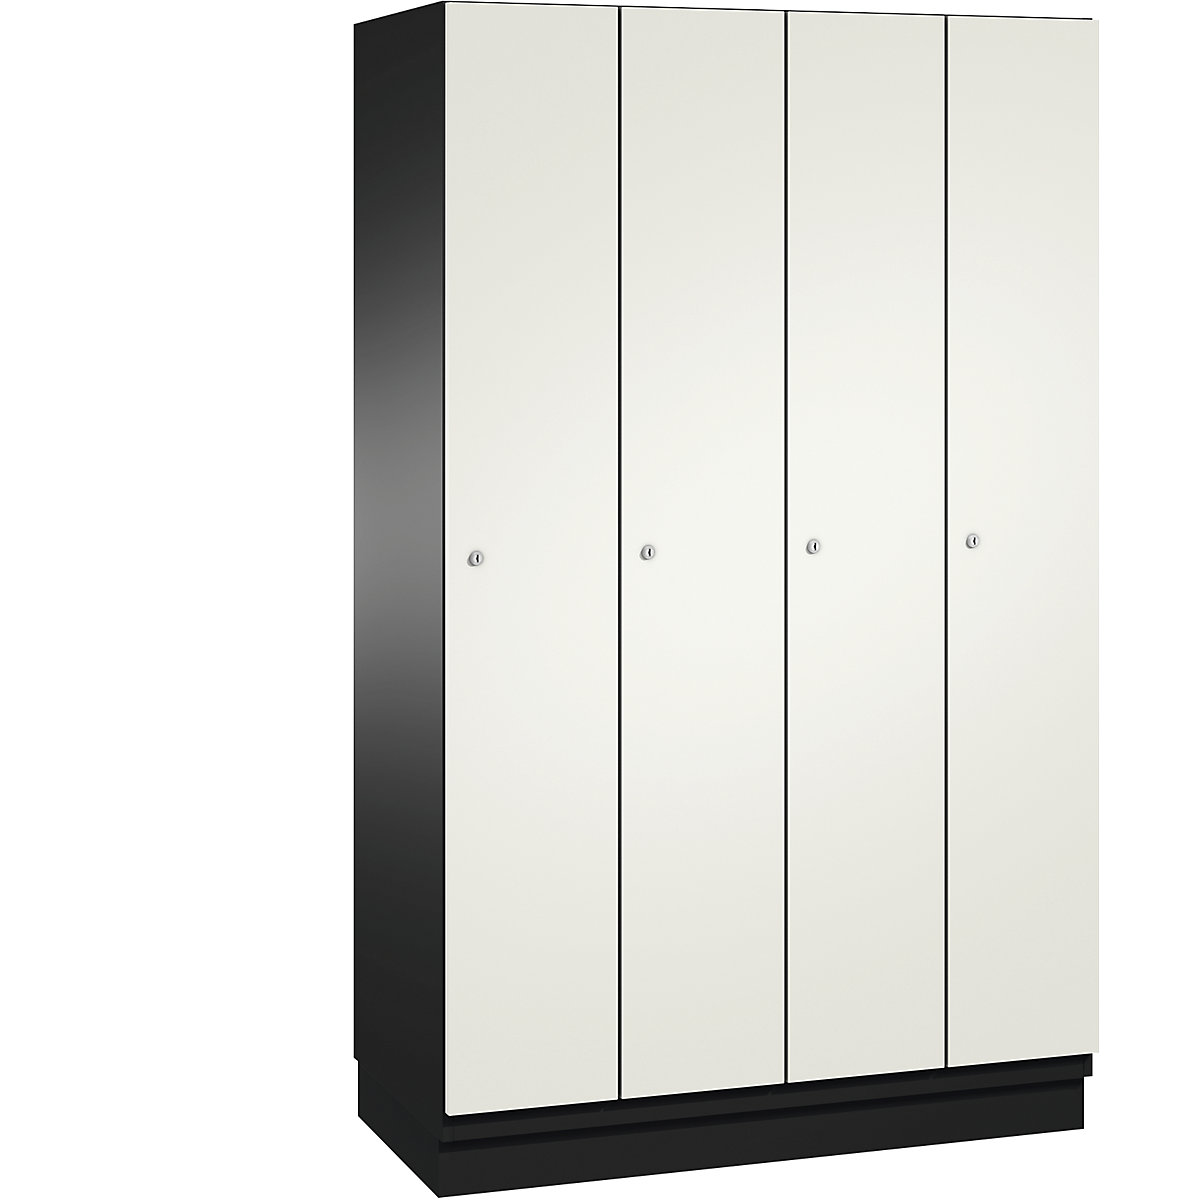 CAMBIO cloakroom locker with sheet steel doors – C+P, 4 compartments, 1200 mm wide, body black grey / door pure white-5